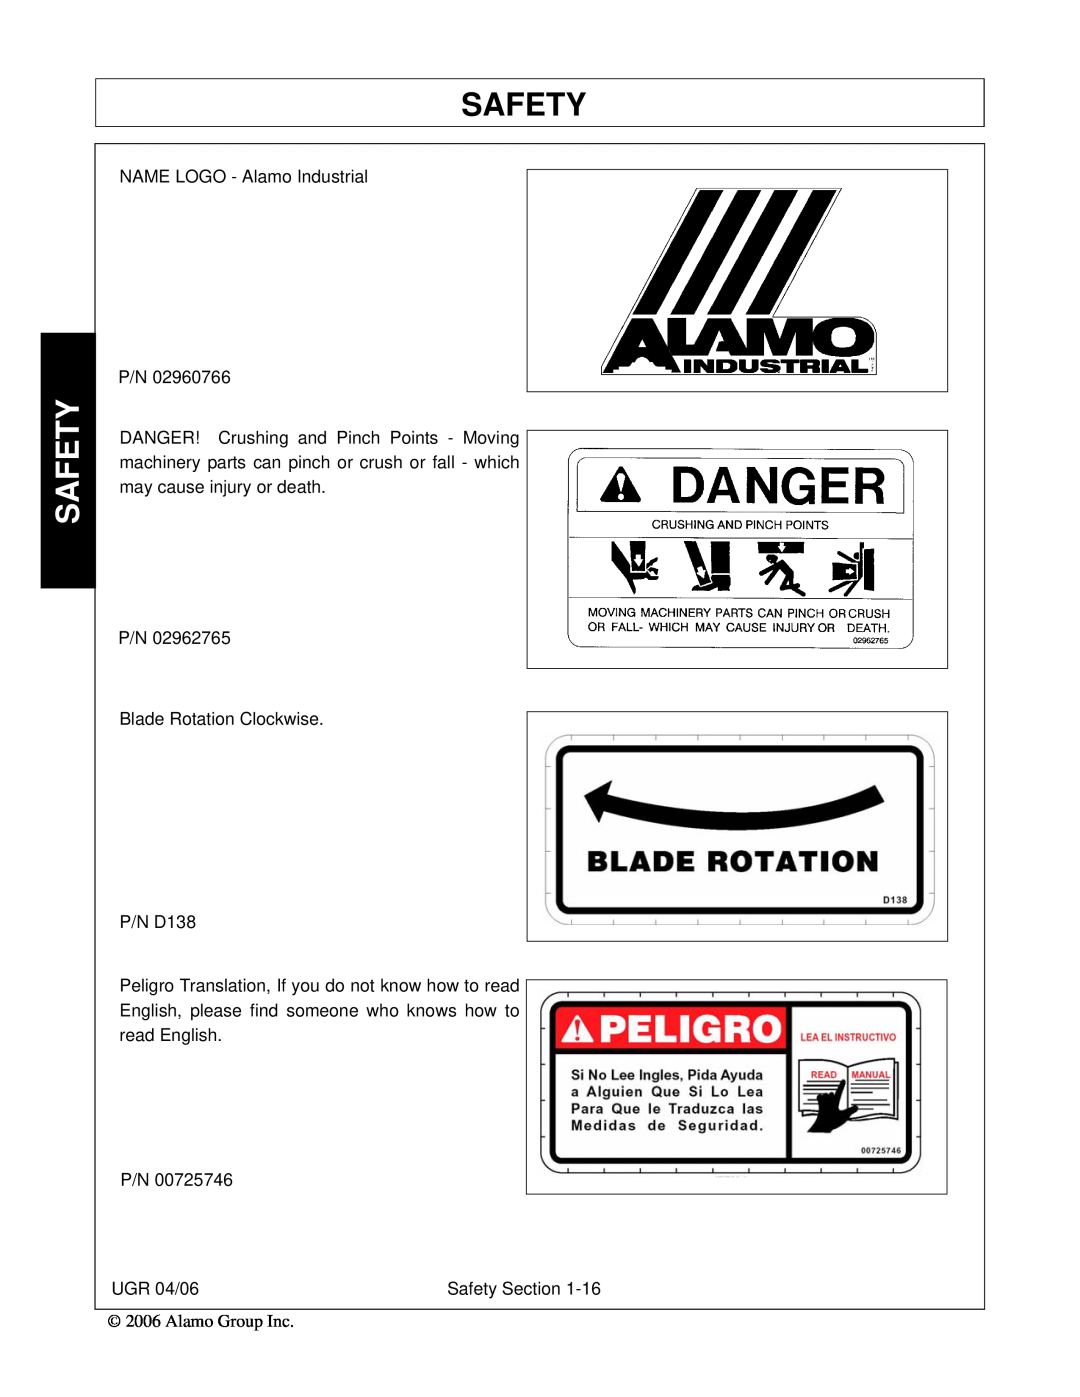 Alamo 02979718C NAME LOGO - Alamo Industrial P/N, P/N Blade Rotation Clockwise P/N D138, UGR 04/06, Safety Section 